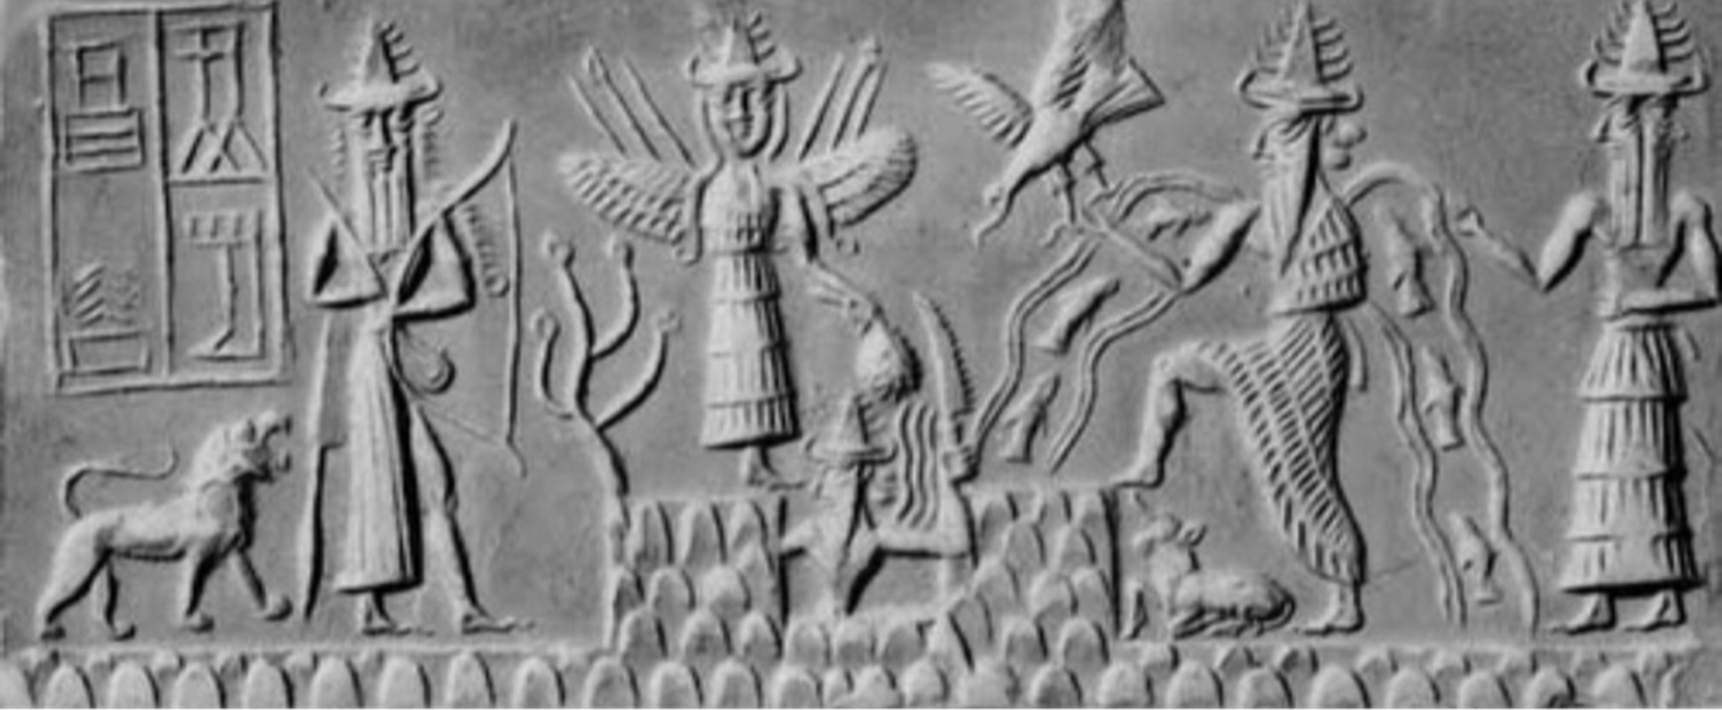 Religion - The Ancient Civilization of Sumer